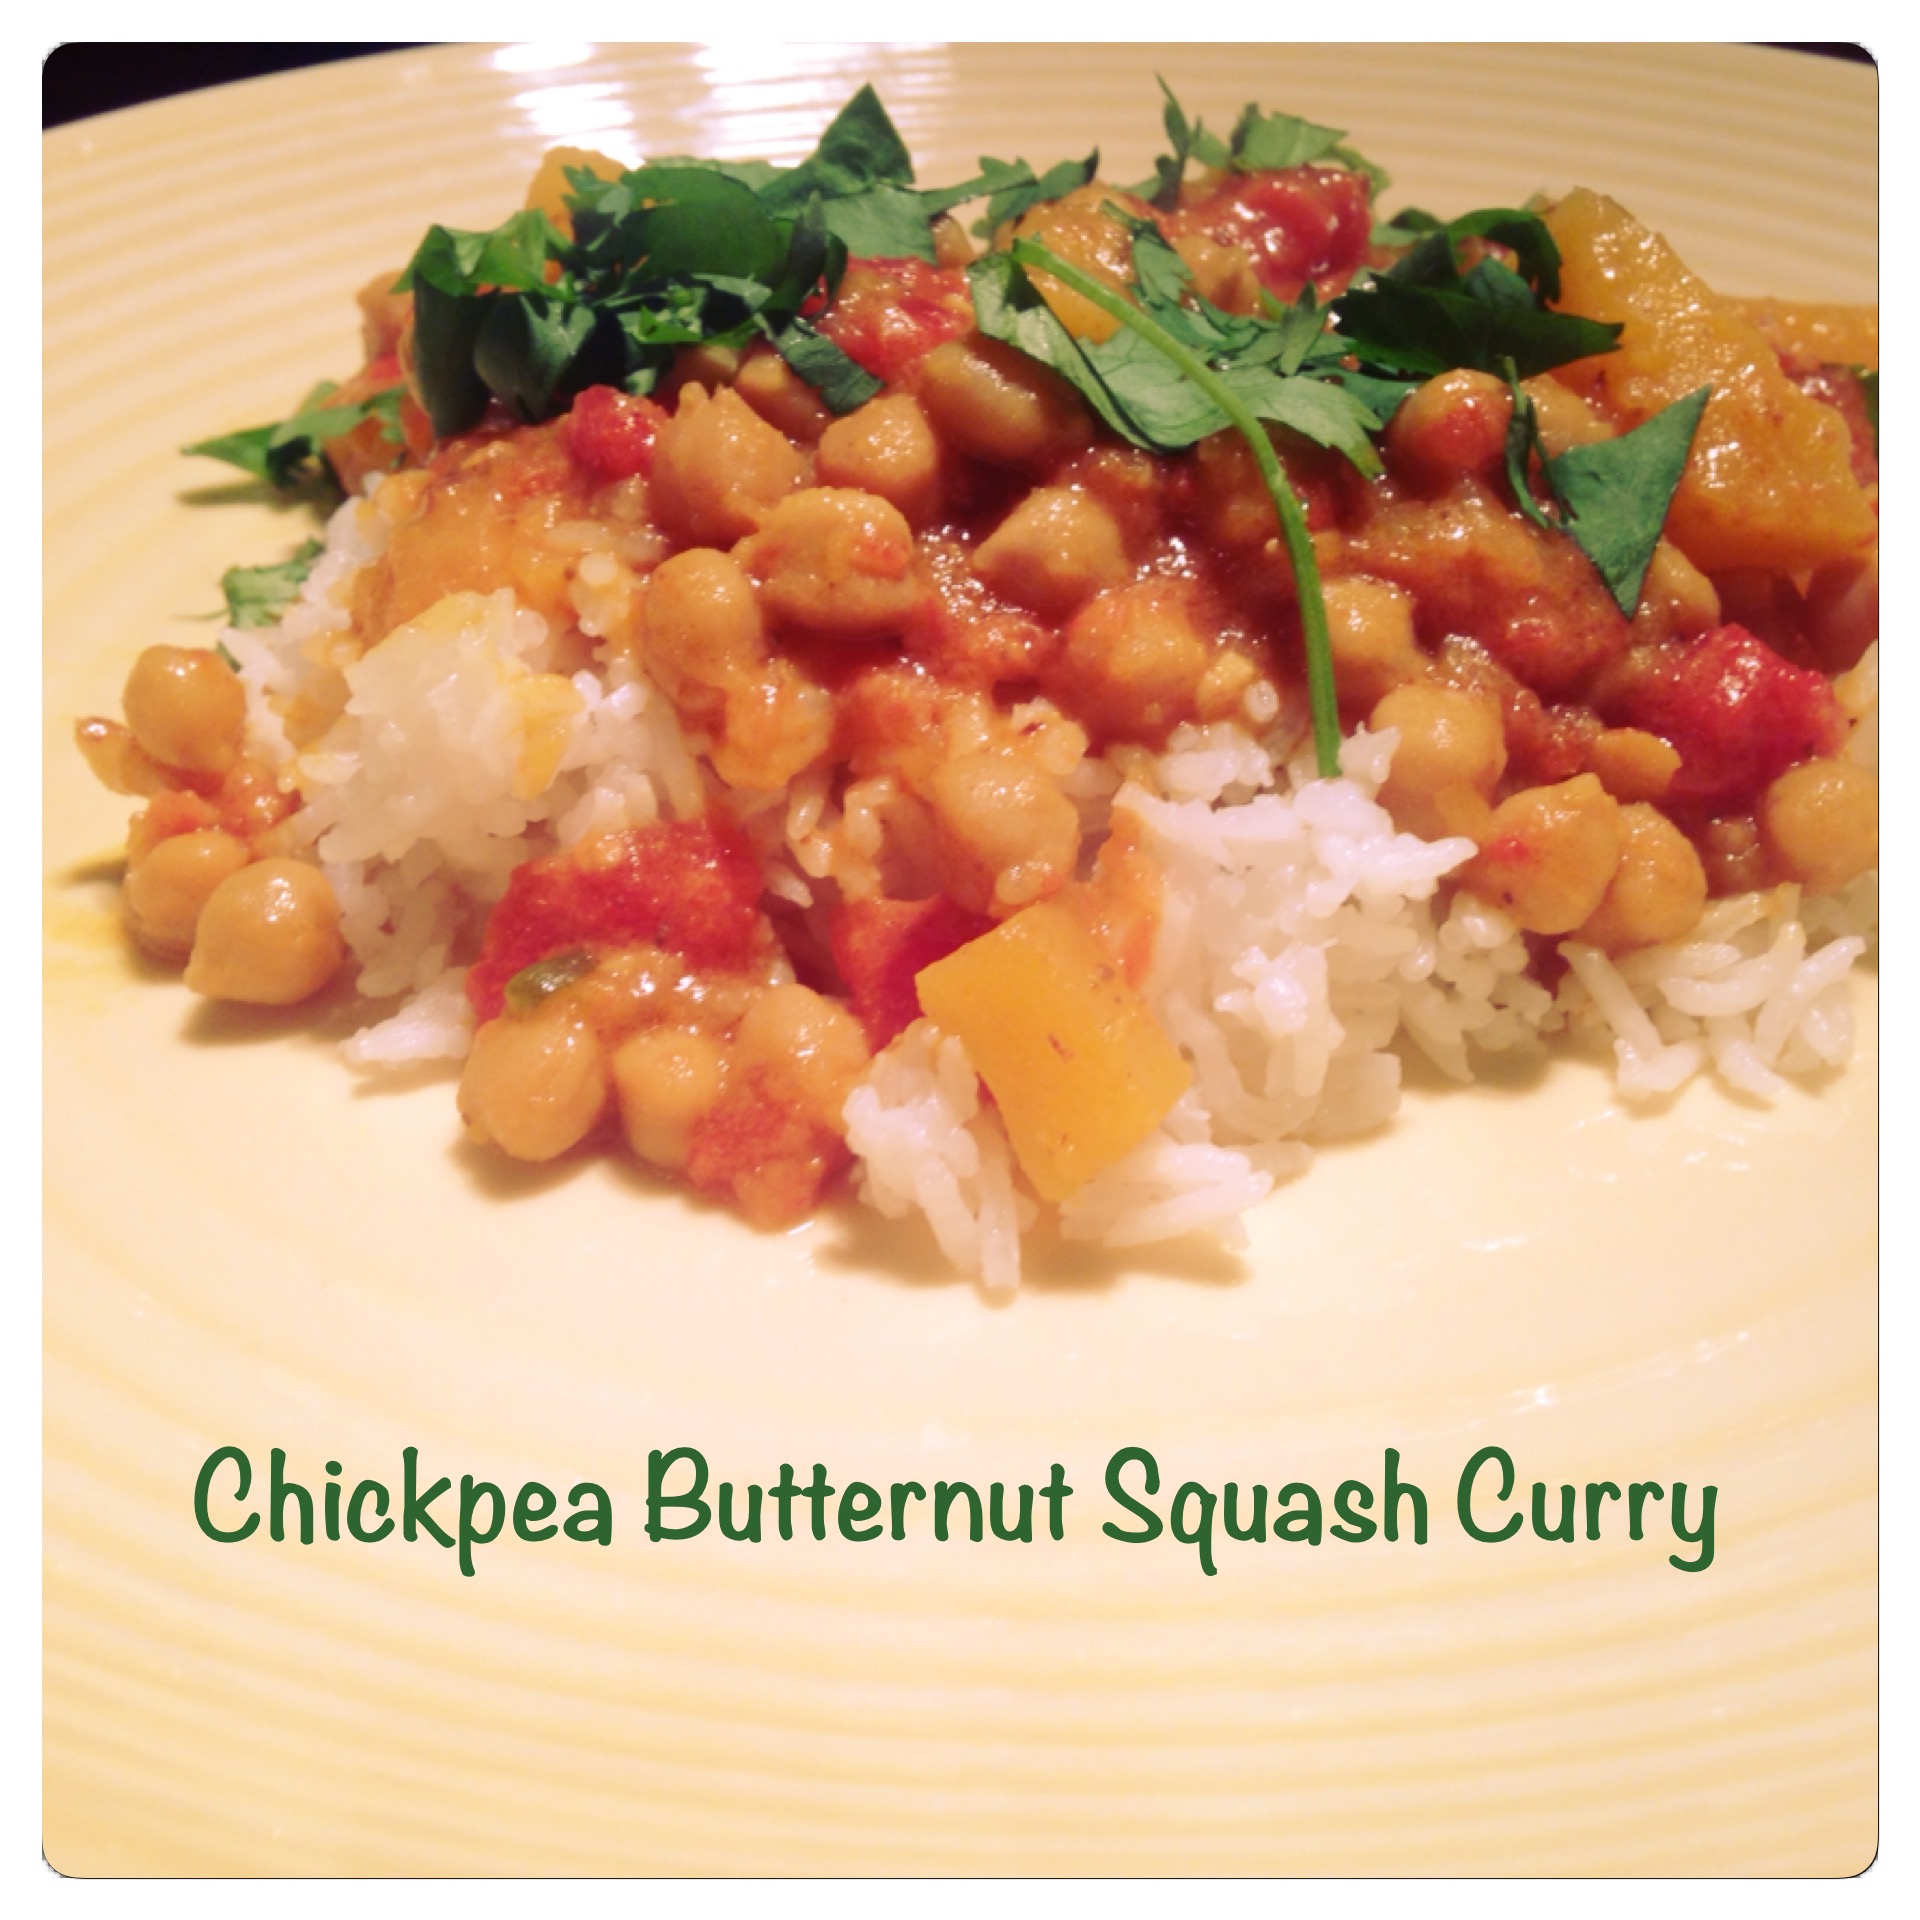 Chickpea Butternut Squash Curry